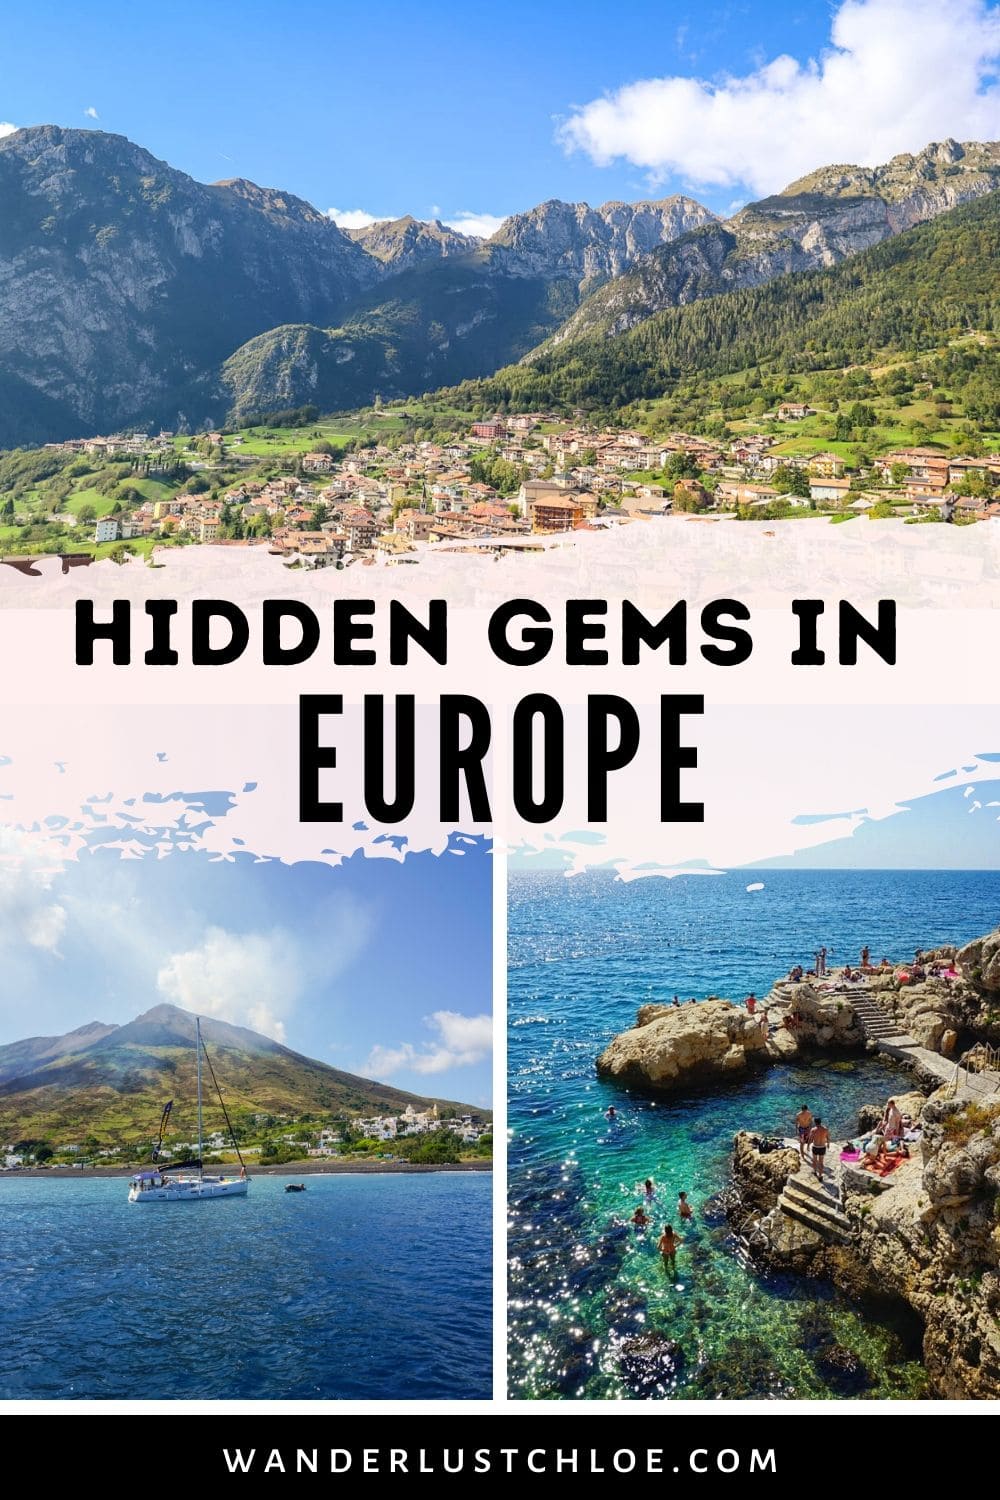 Hidden gems in Europe